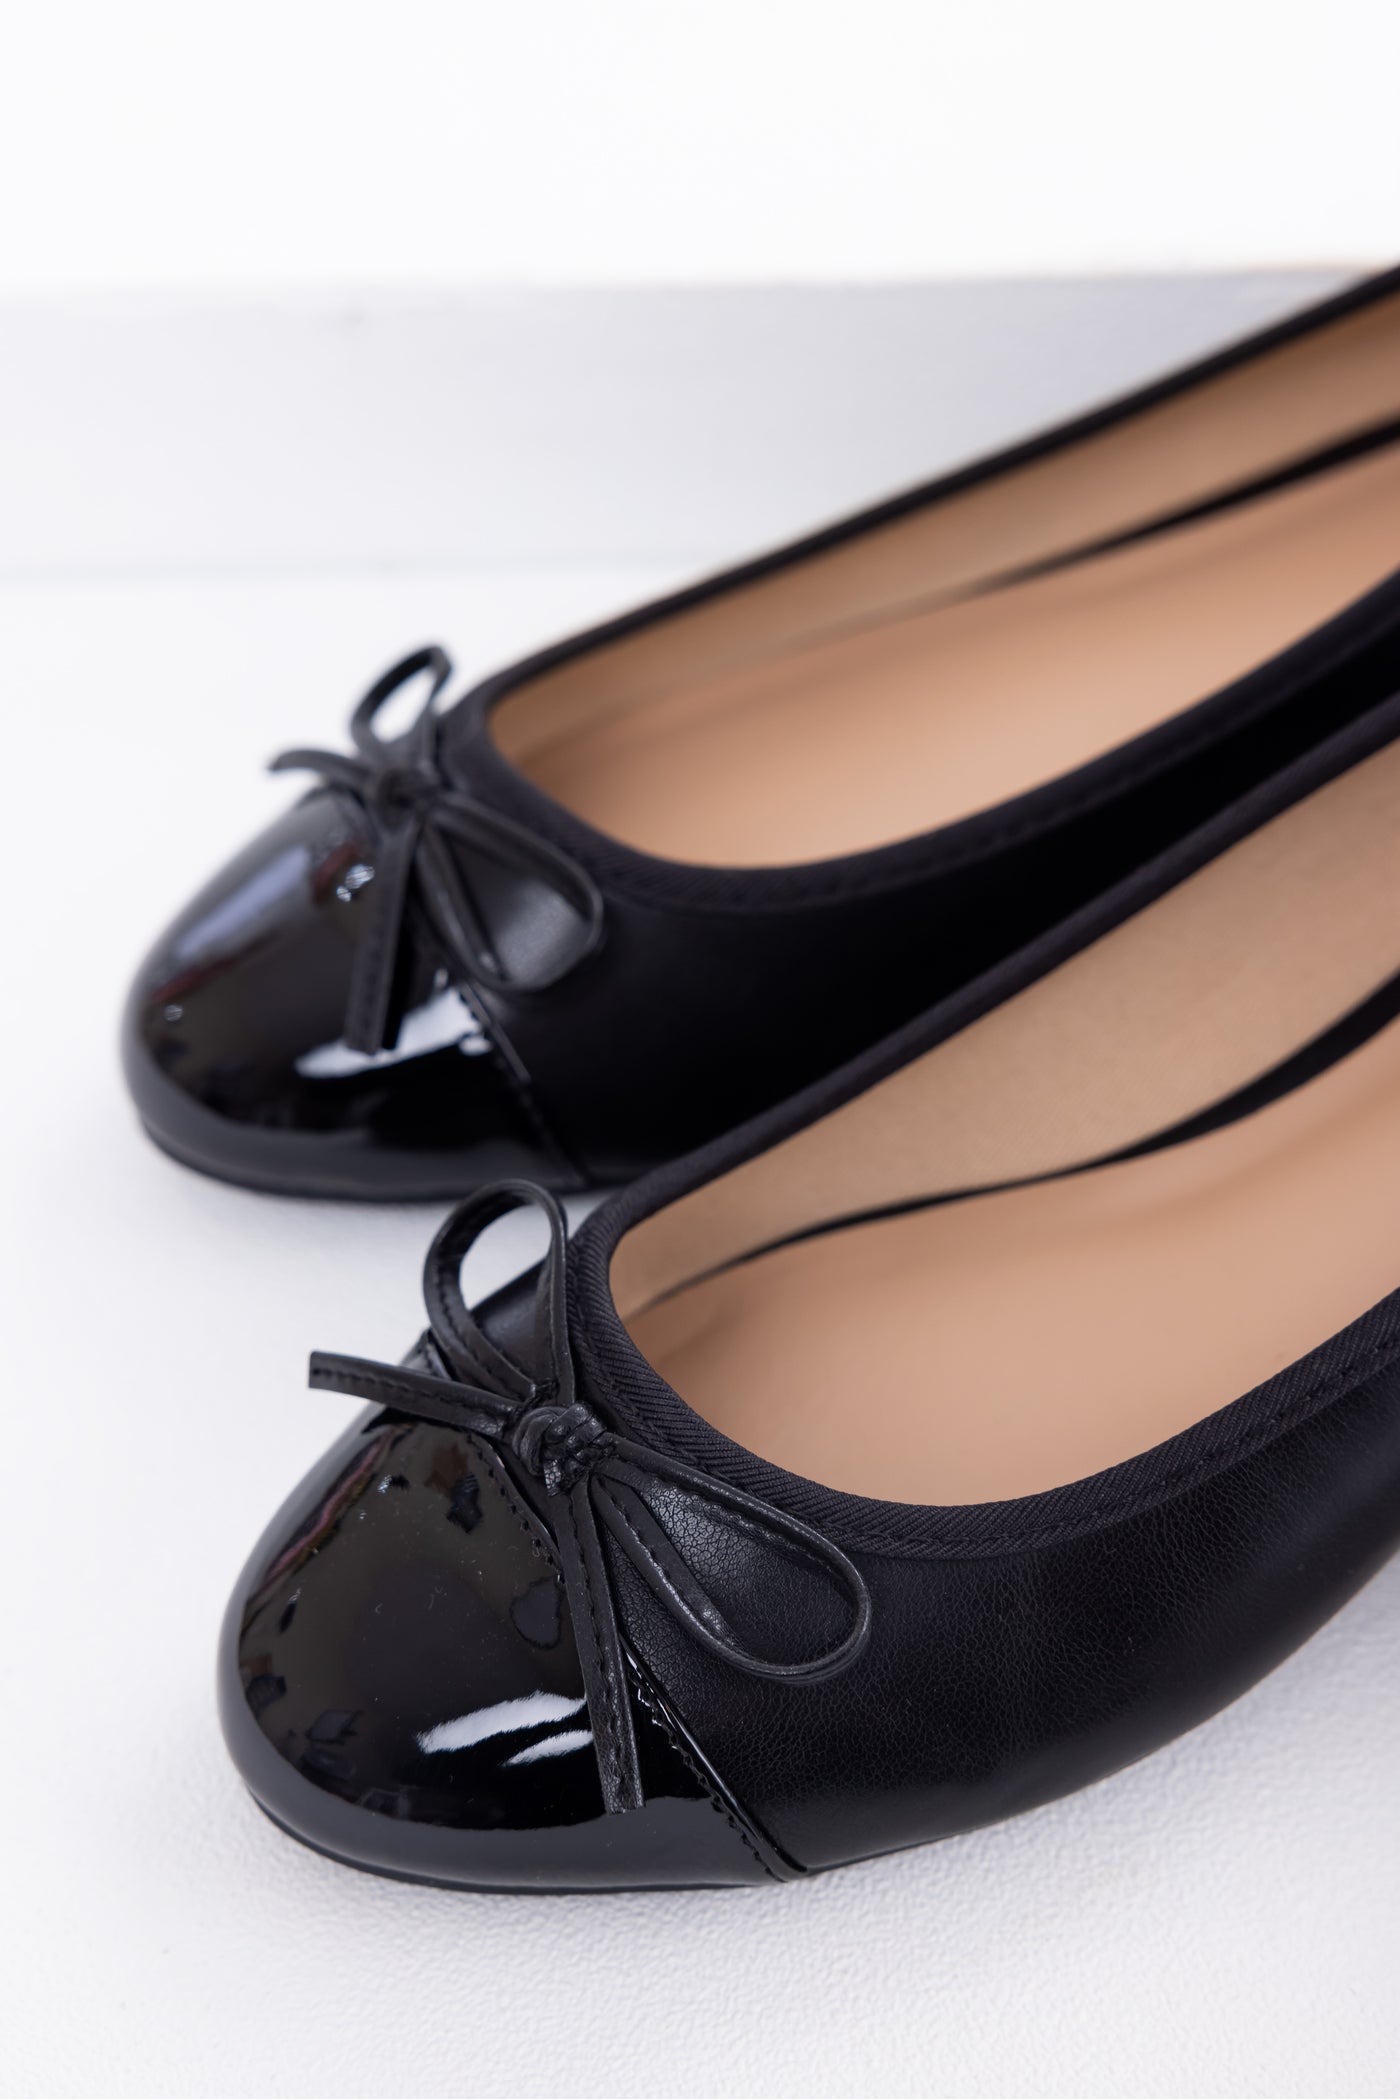 Black Faux Leather Shiny Toe Ballerina Flats